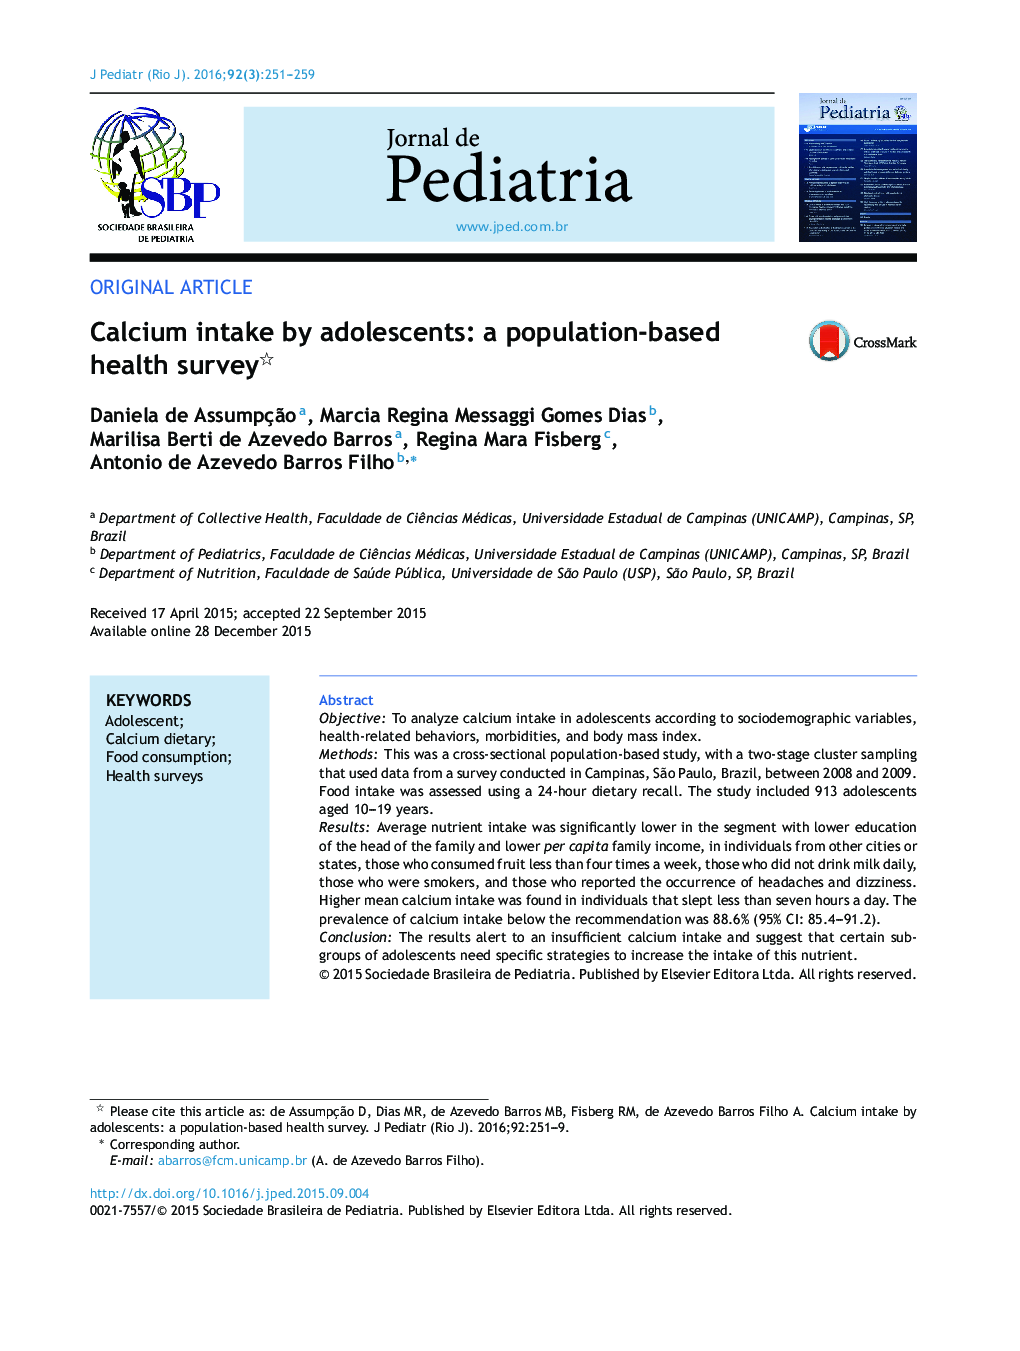 Calcium intake by adolescents: a population-based health survey 